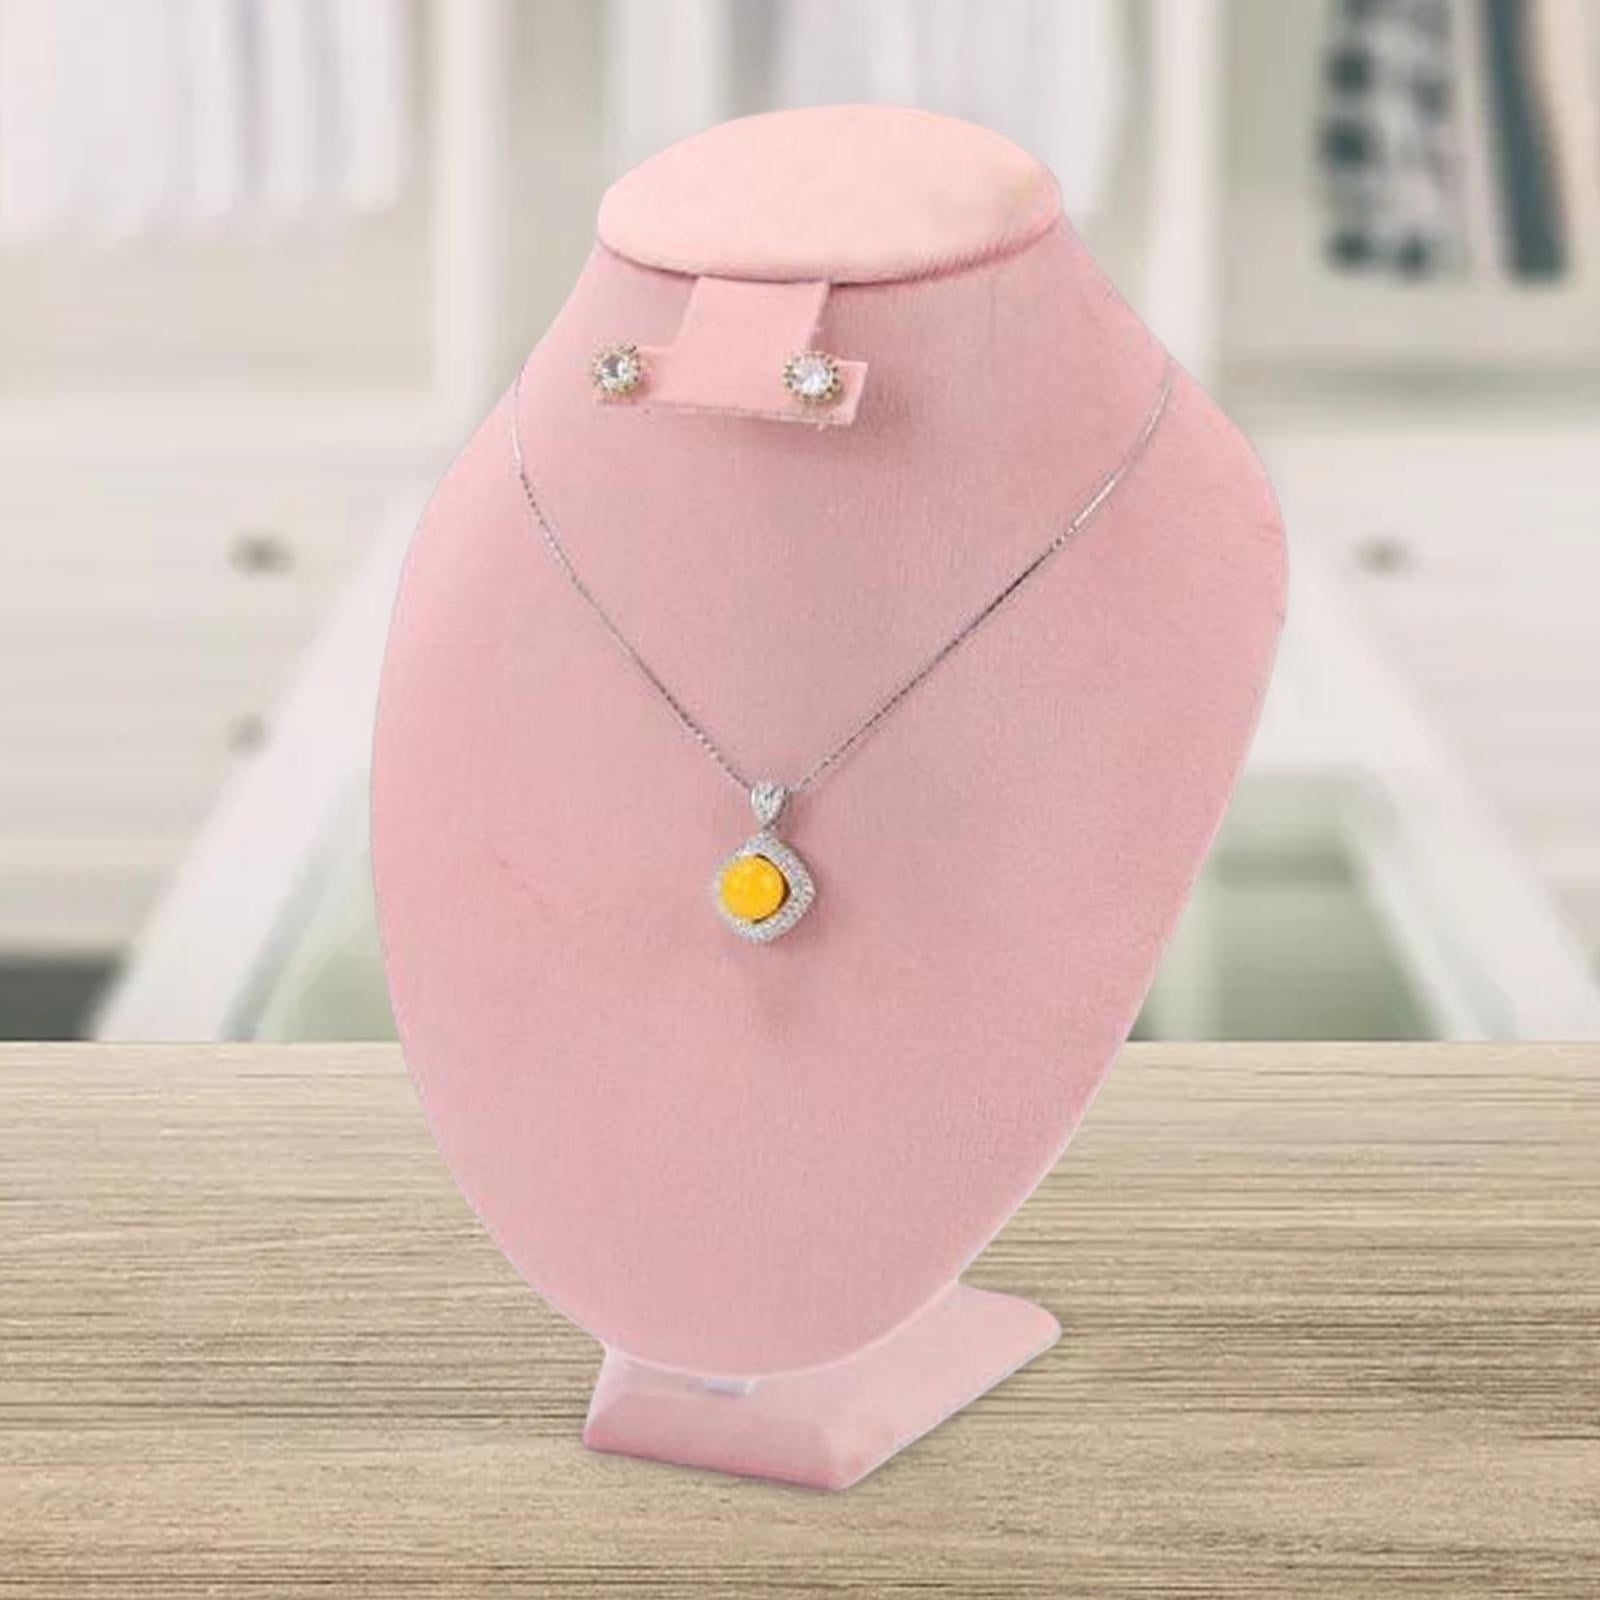 Premium AI Image | Bust Showcase Elegant Jewelry Display for Necklace  Pendants